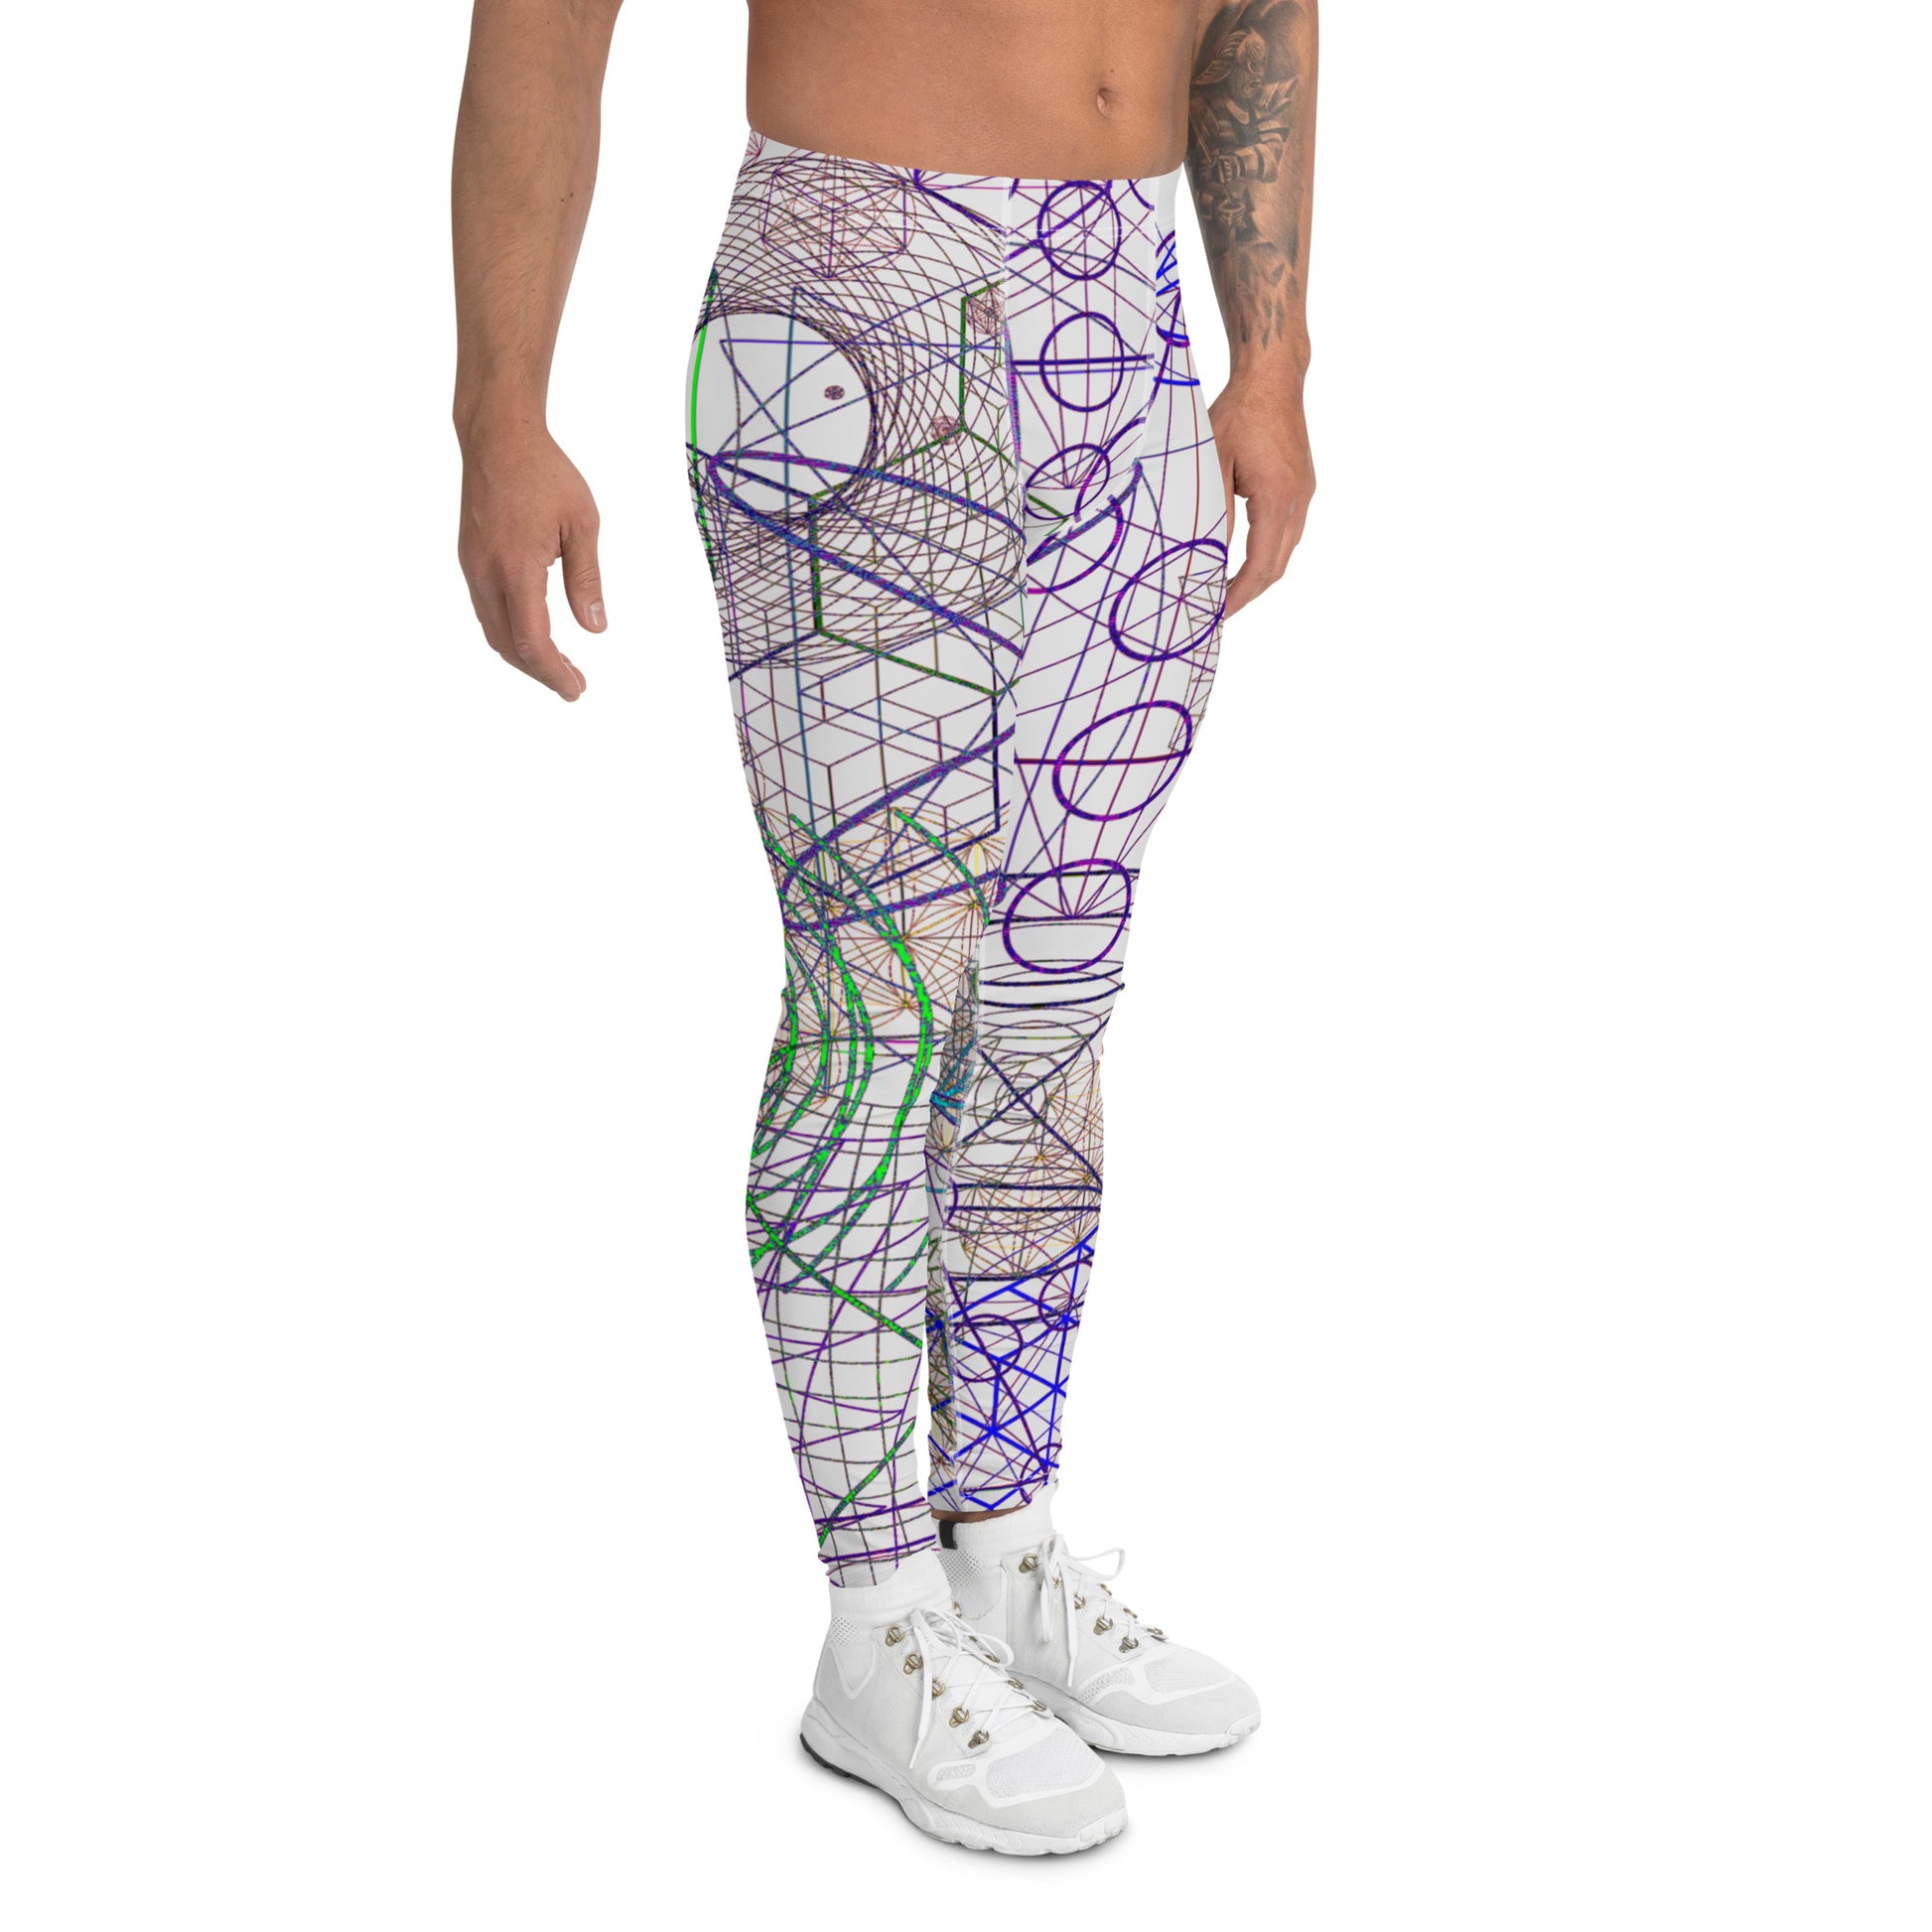 Men's all-over print leggings with white background, full-back view.